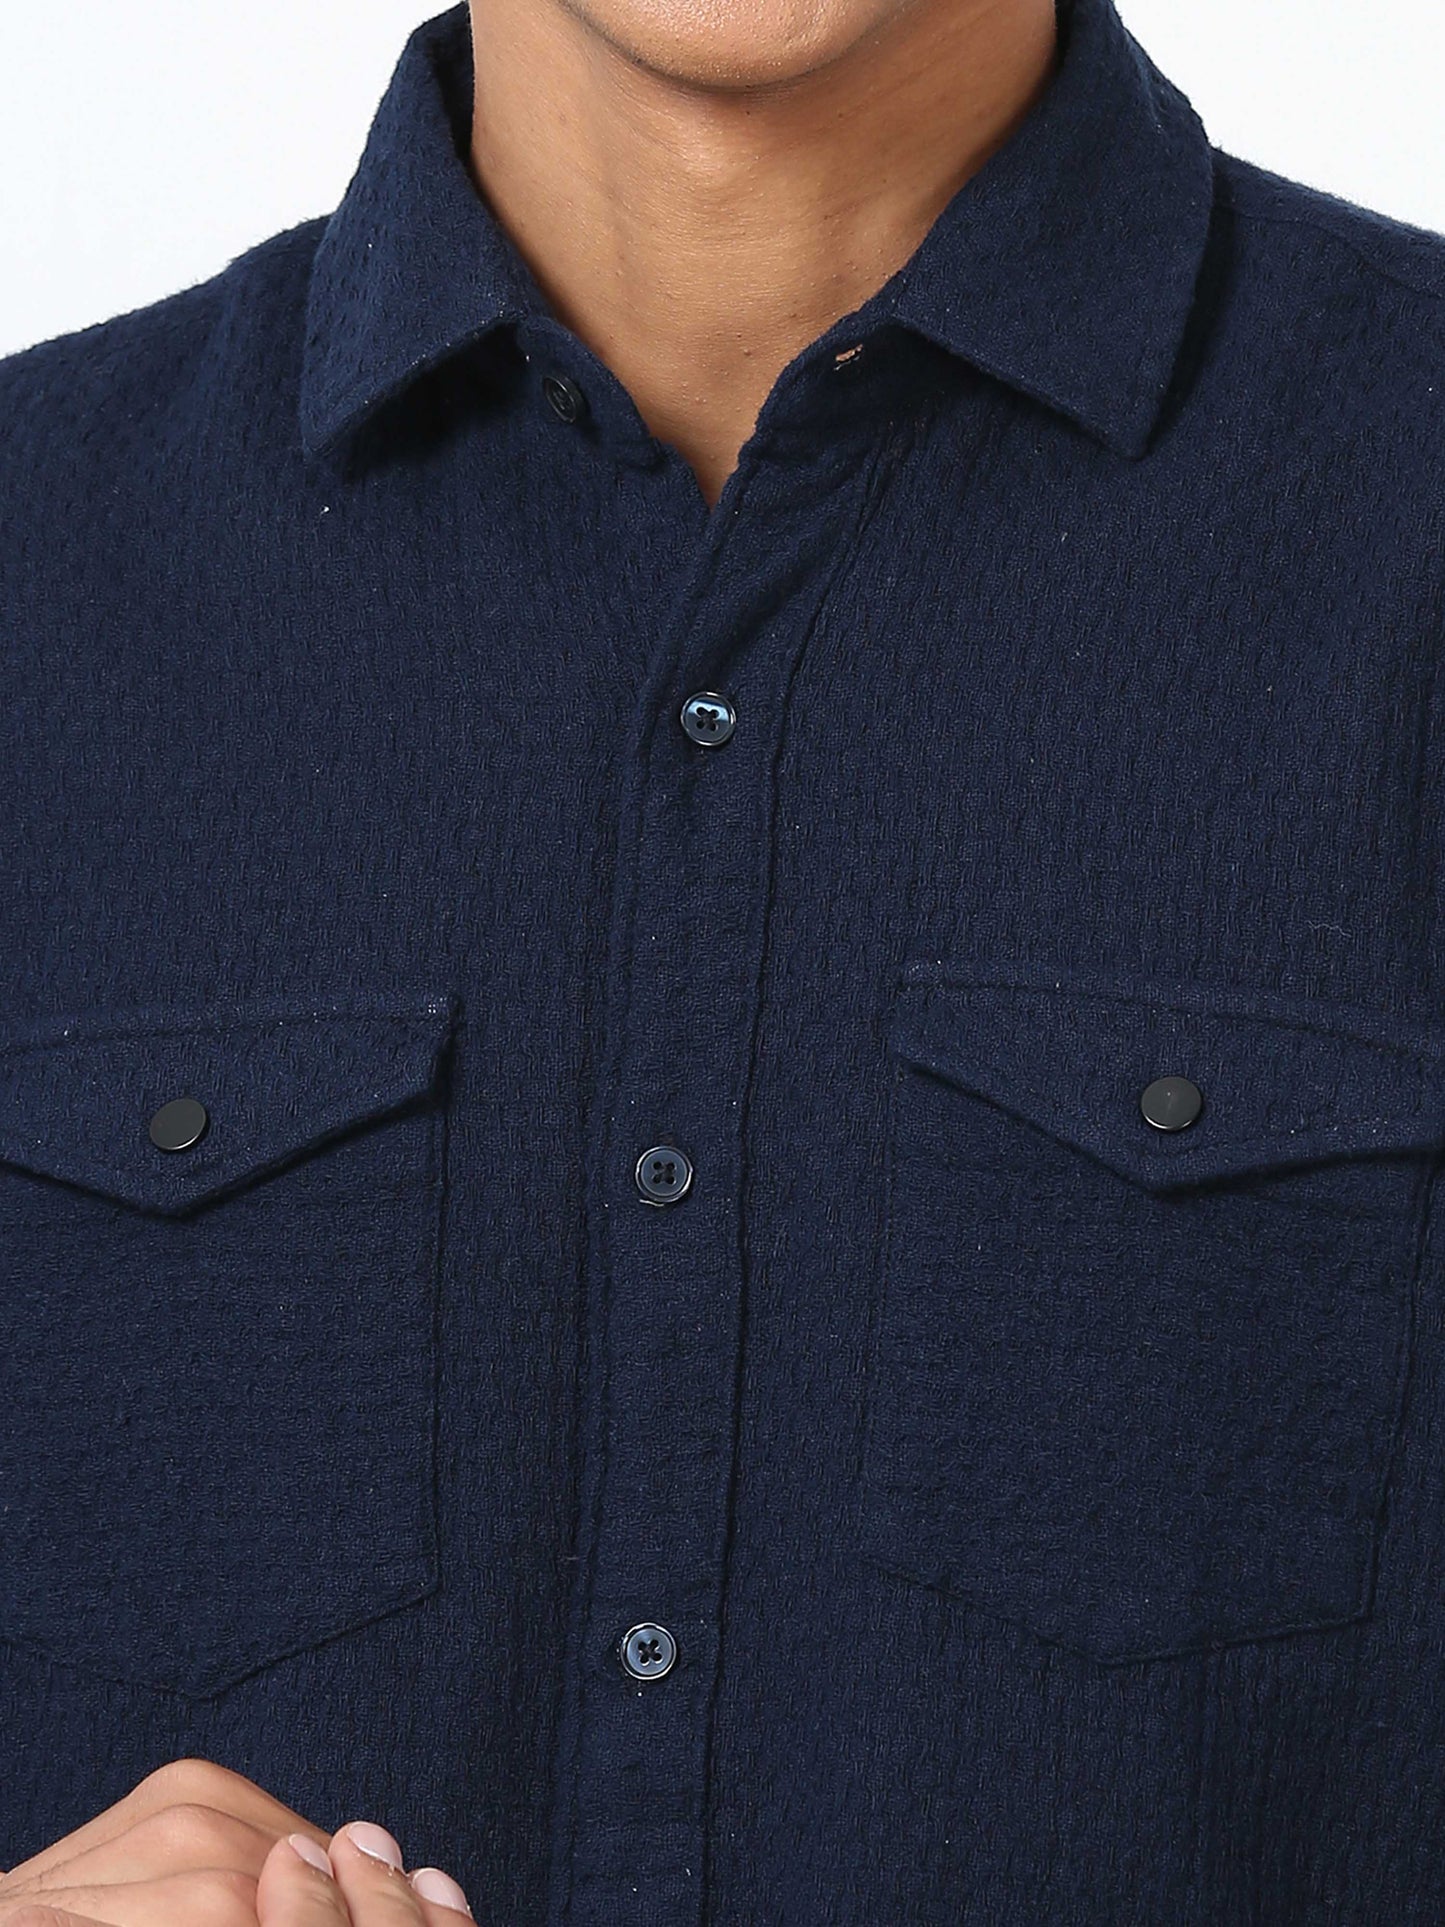 Navy Blue Double Pocket Shirt For Men